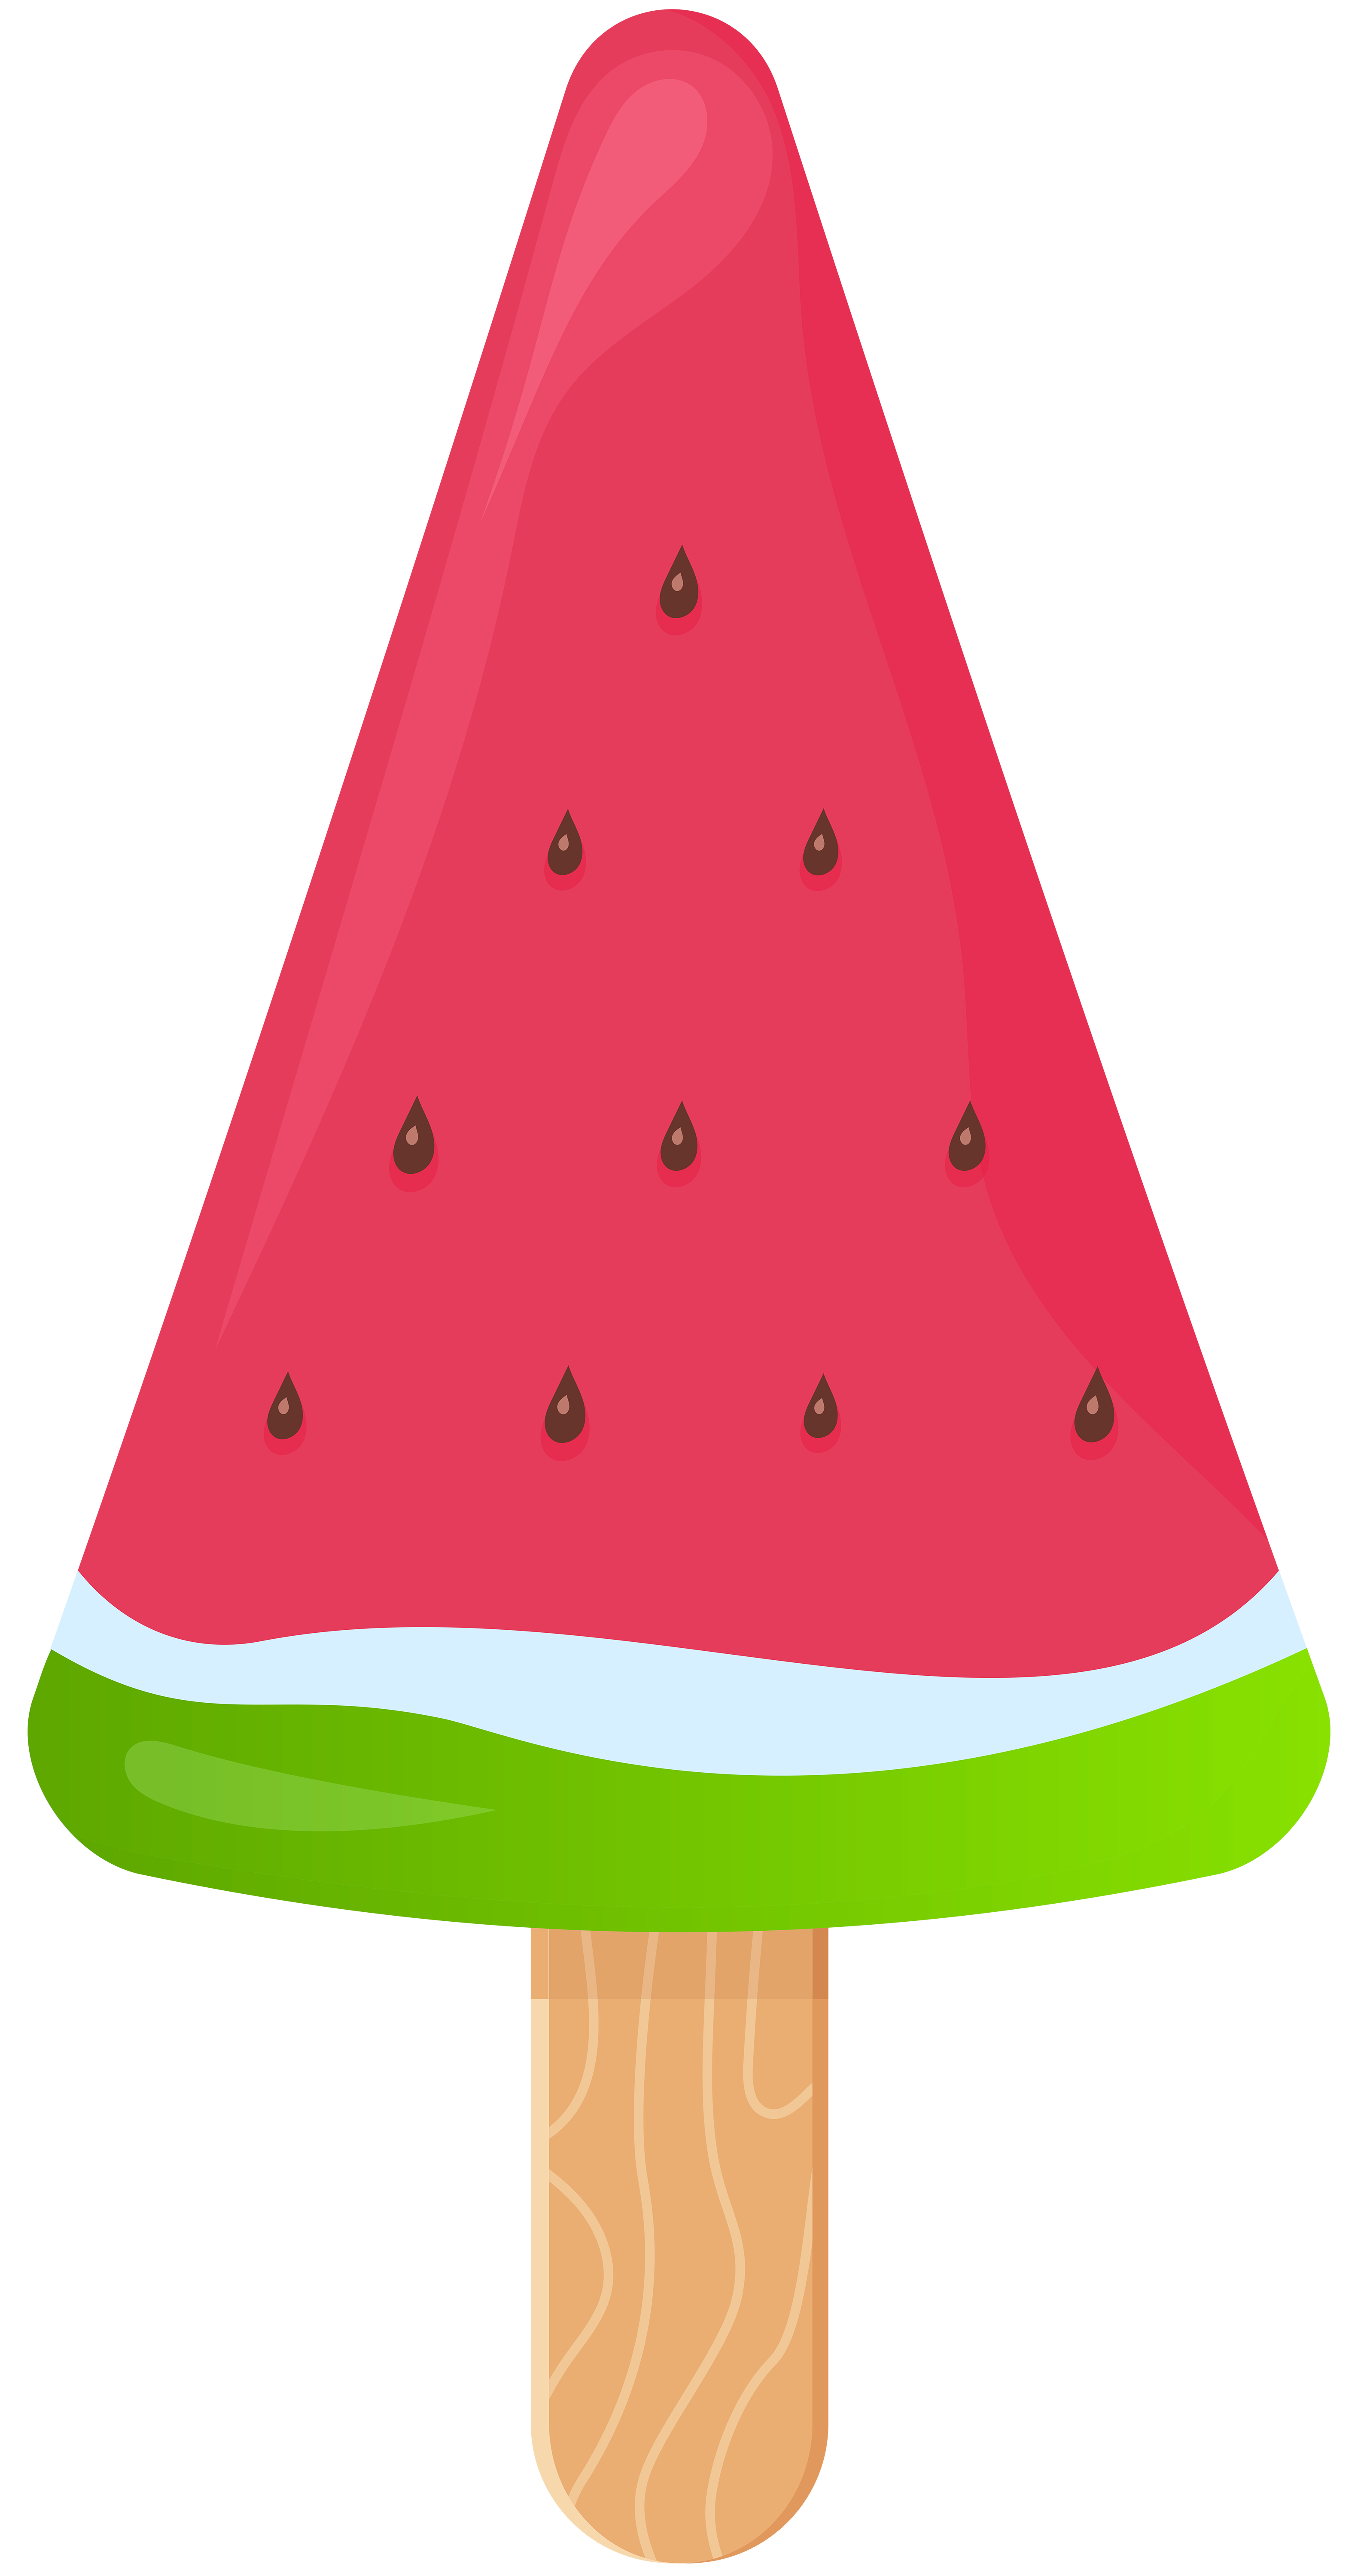 Clipart rose stick. Design watermelon frames illustrations